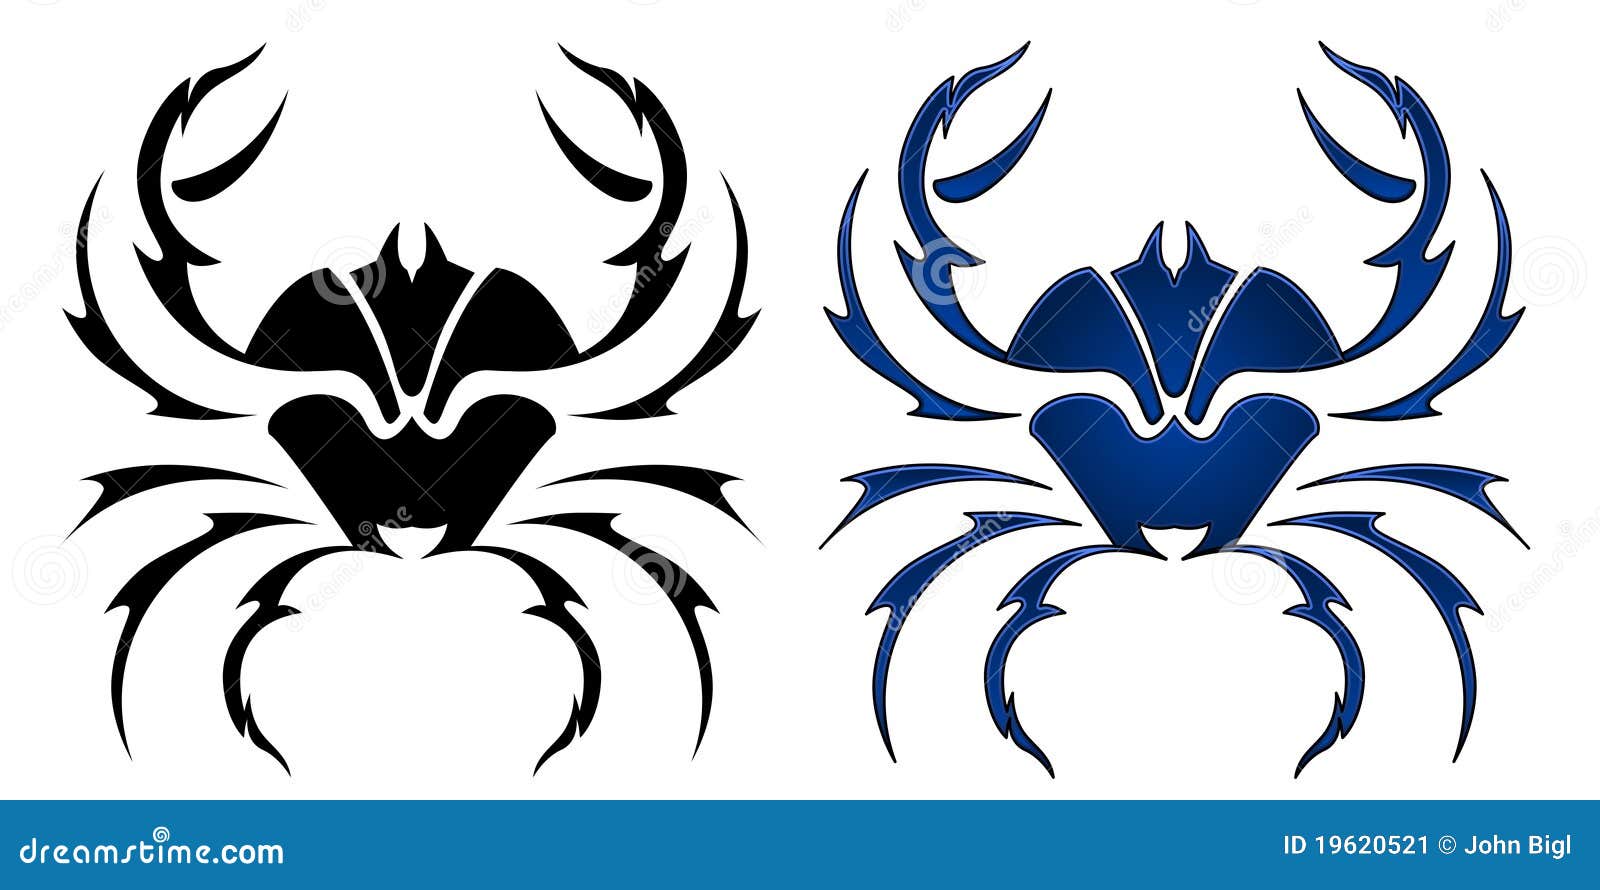 Blue Crab Tattoo Design  Crab tattoo Art Crab art